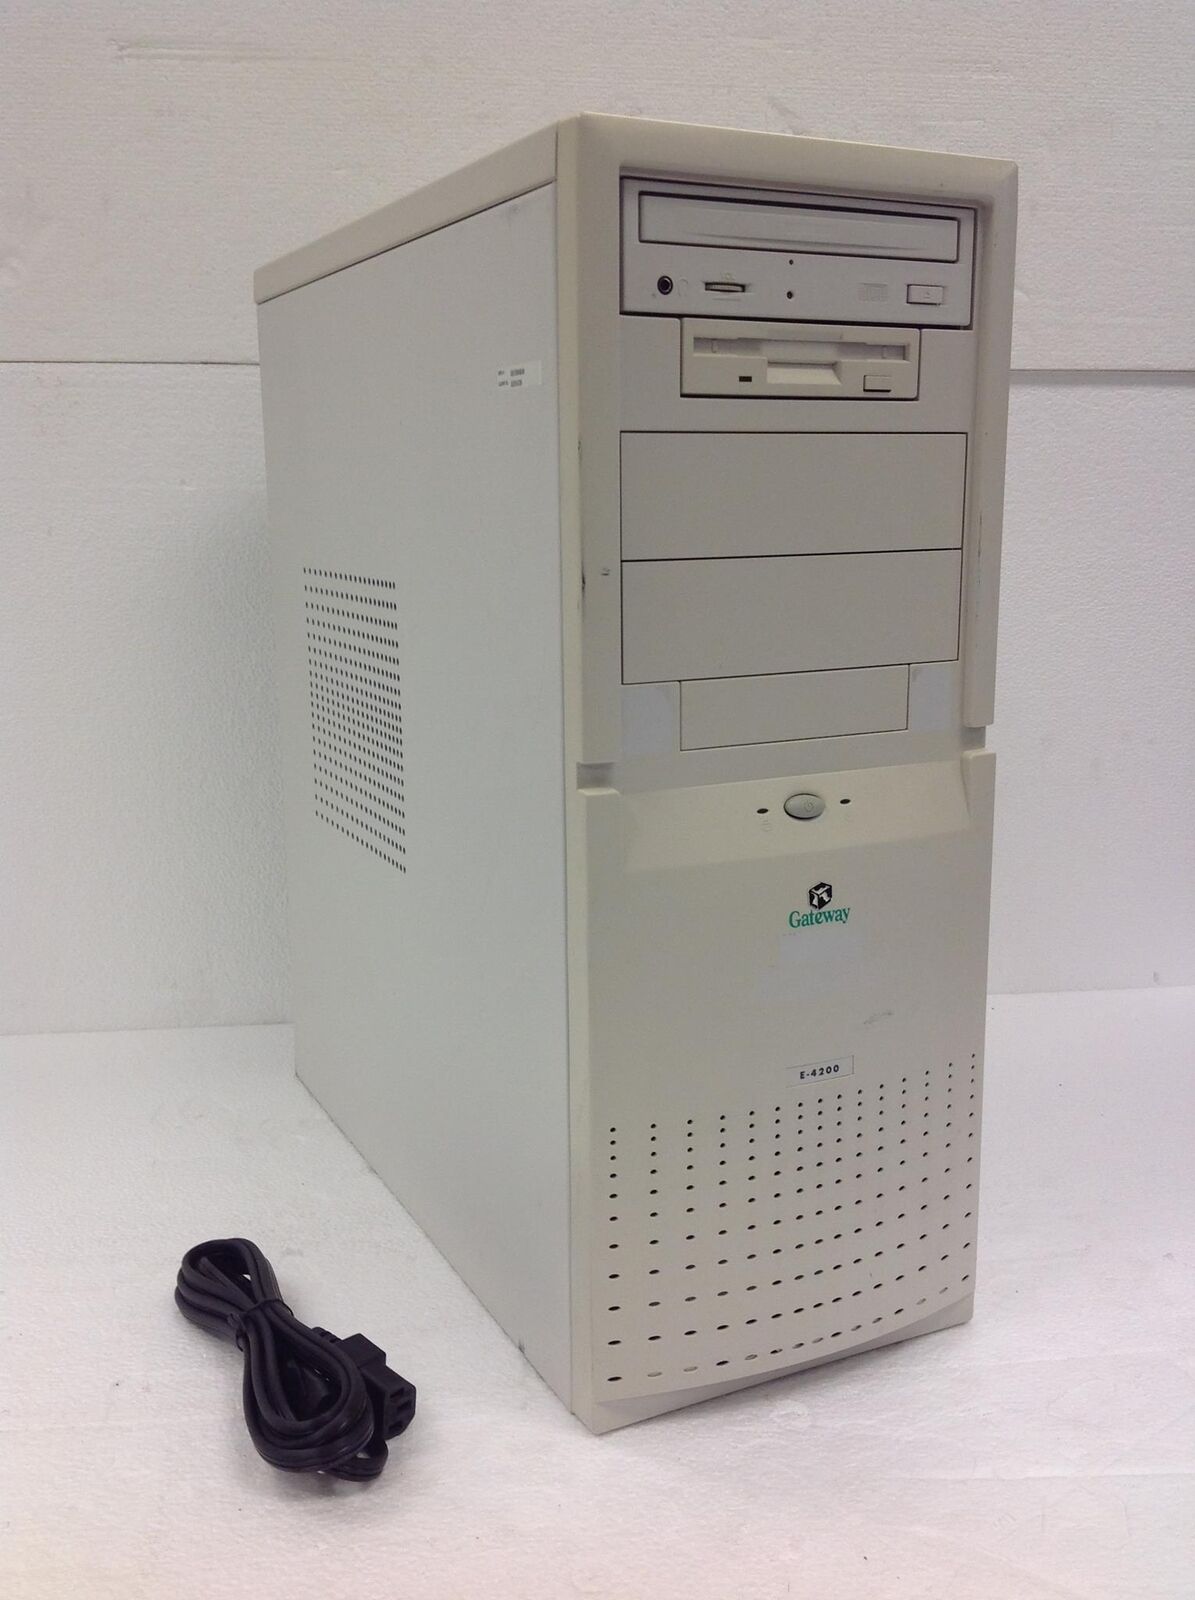 GATEWAY E-4200 PIII 450Mhz Pentium III Computer 128MB RAM, ATI Video, CDROM,noHD